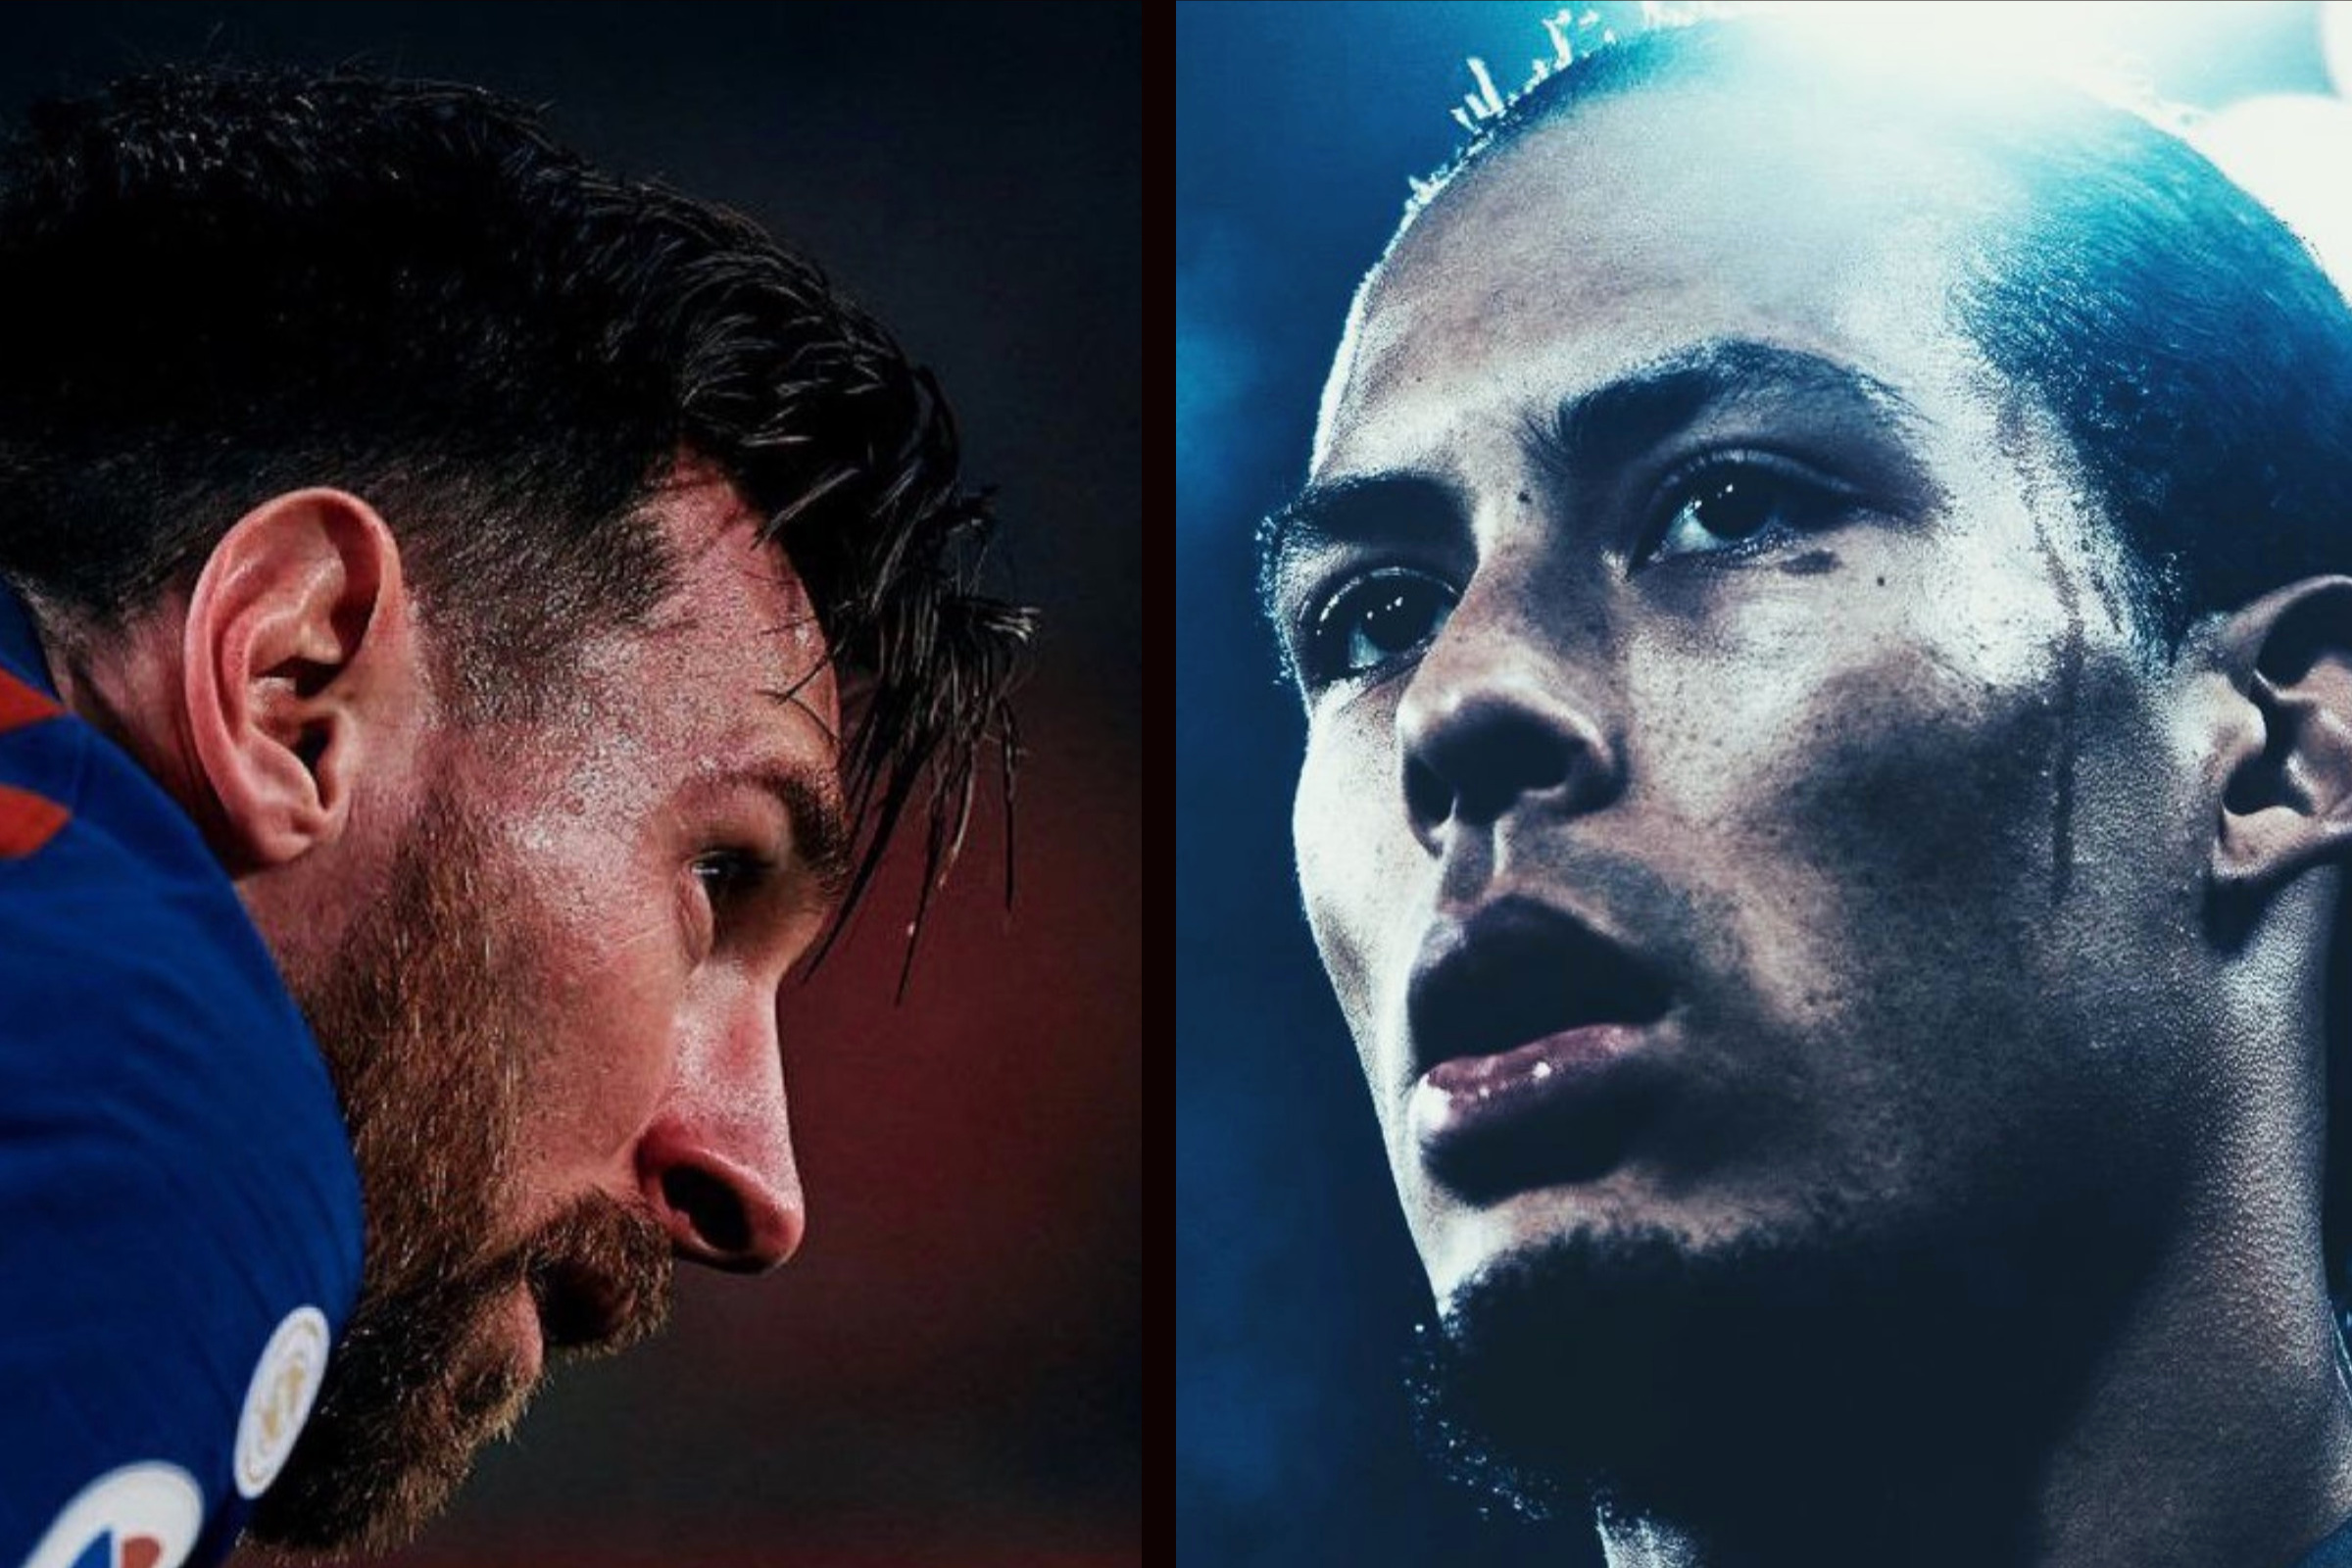 Lionel Messi versus Virgil van Dijk in the Champions League semi-finals is nothing short of mouth-watering